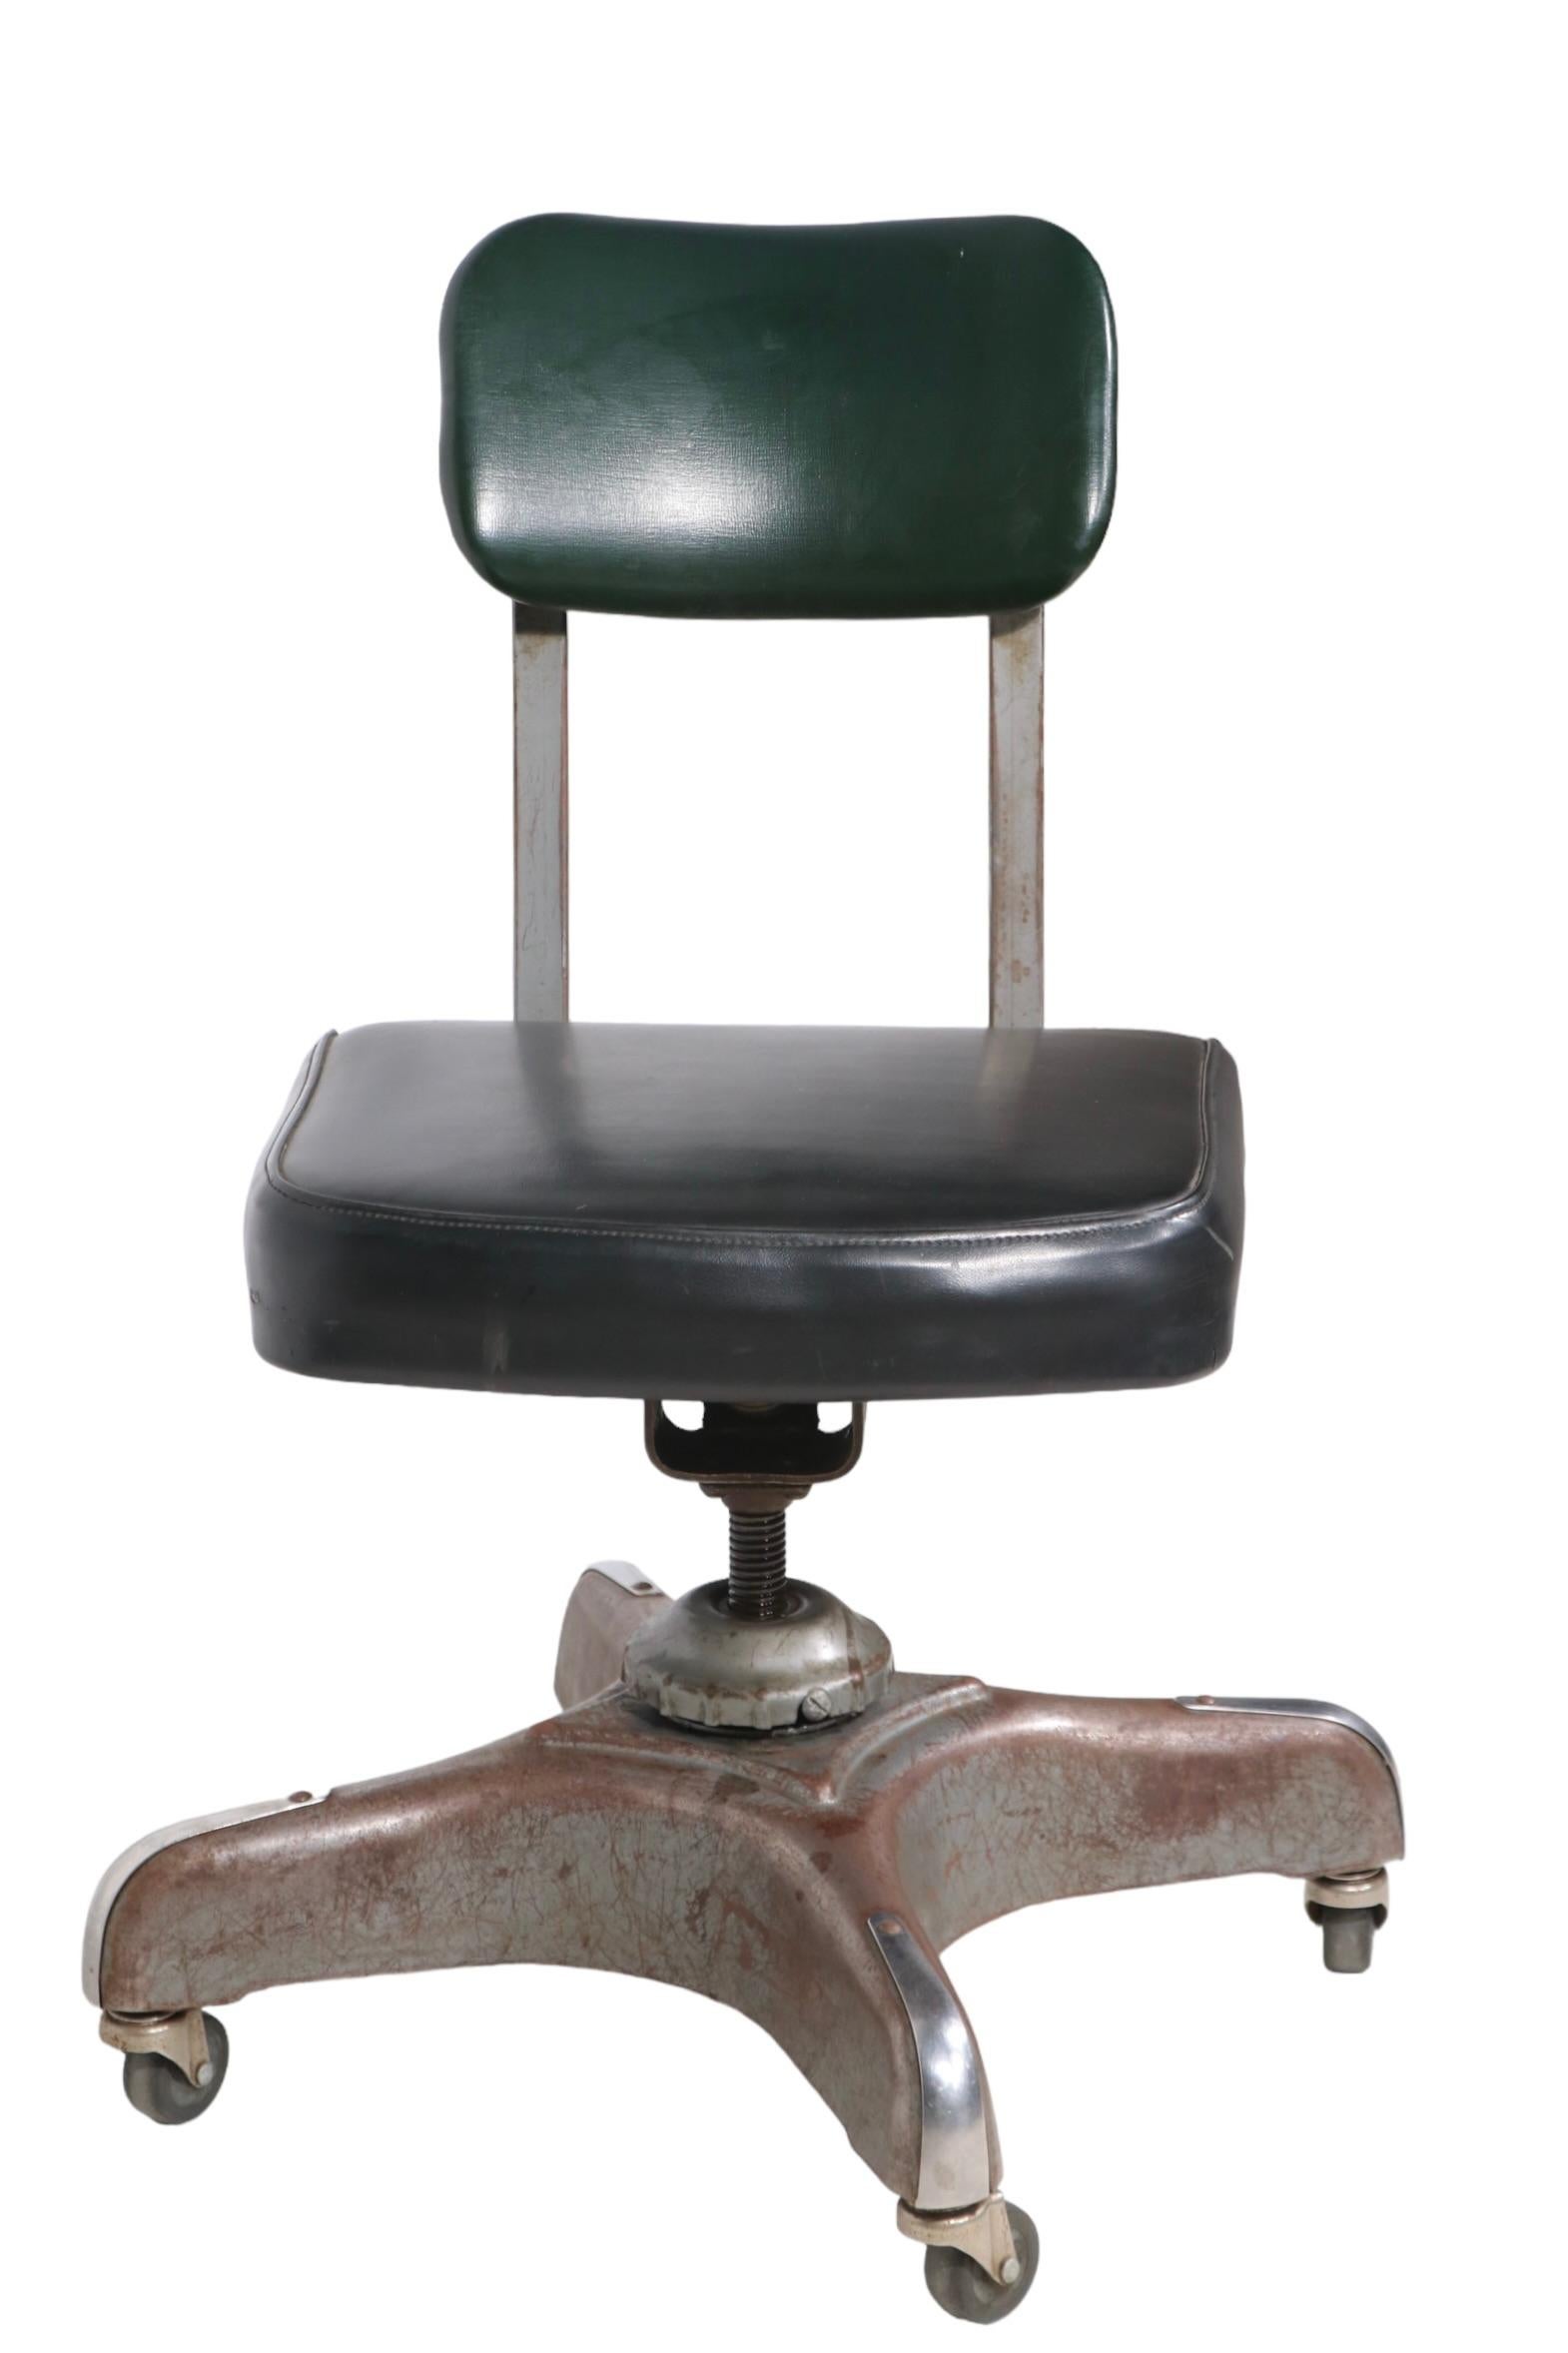 Art Deco Industrial Swivel Tilt Armless Desk Chair by Harter Corporation 1930/40 For Sale 3